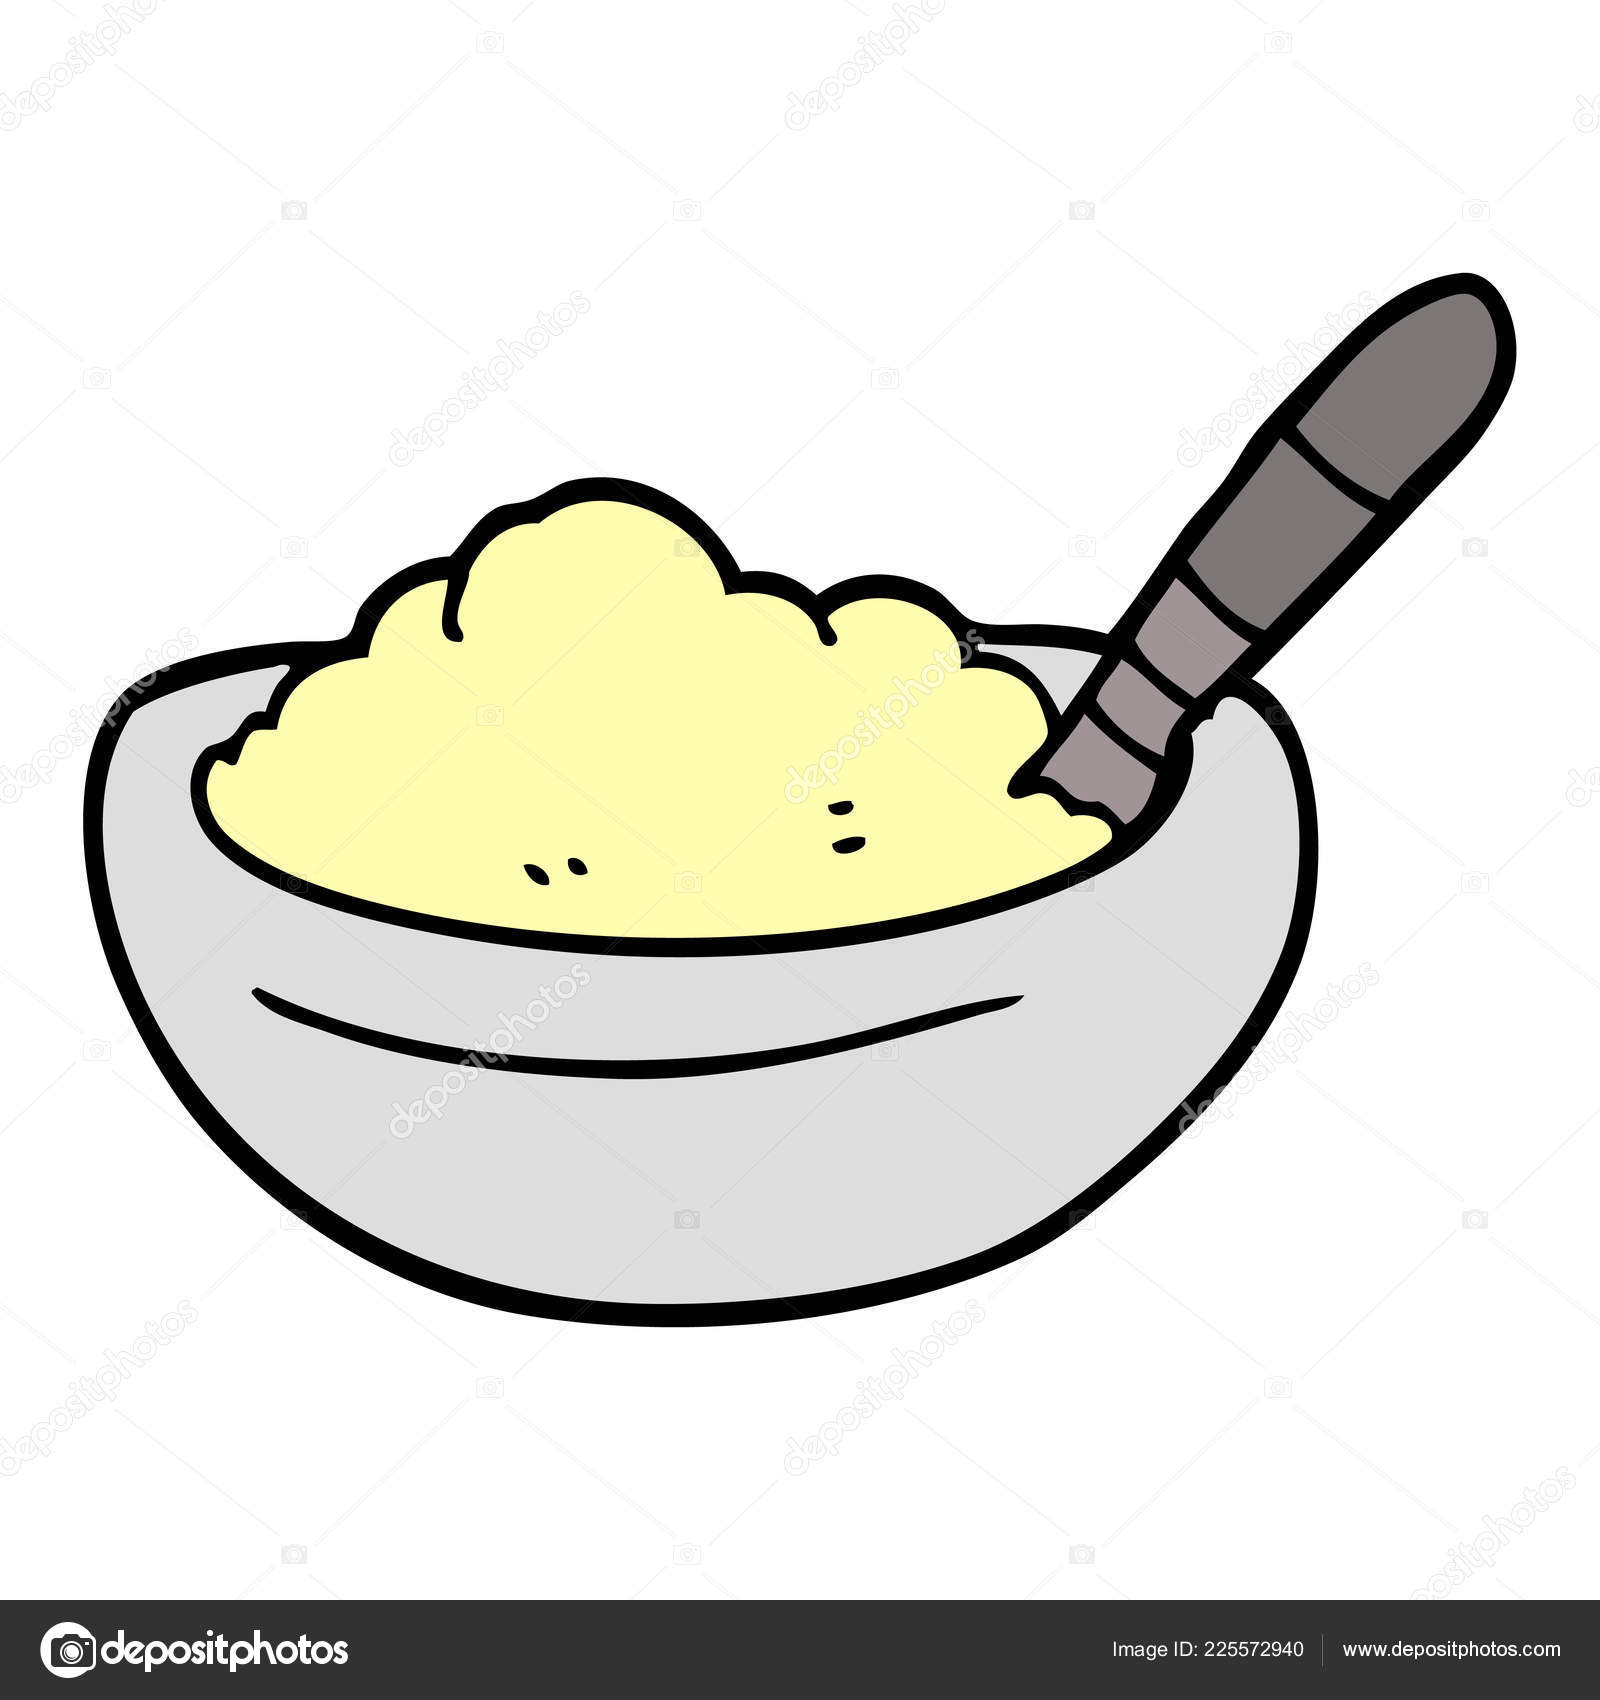 Pictures Cartoon Mashed Potatoes Cartoon Doodle Bowl.